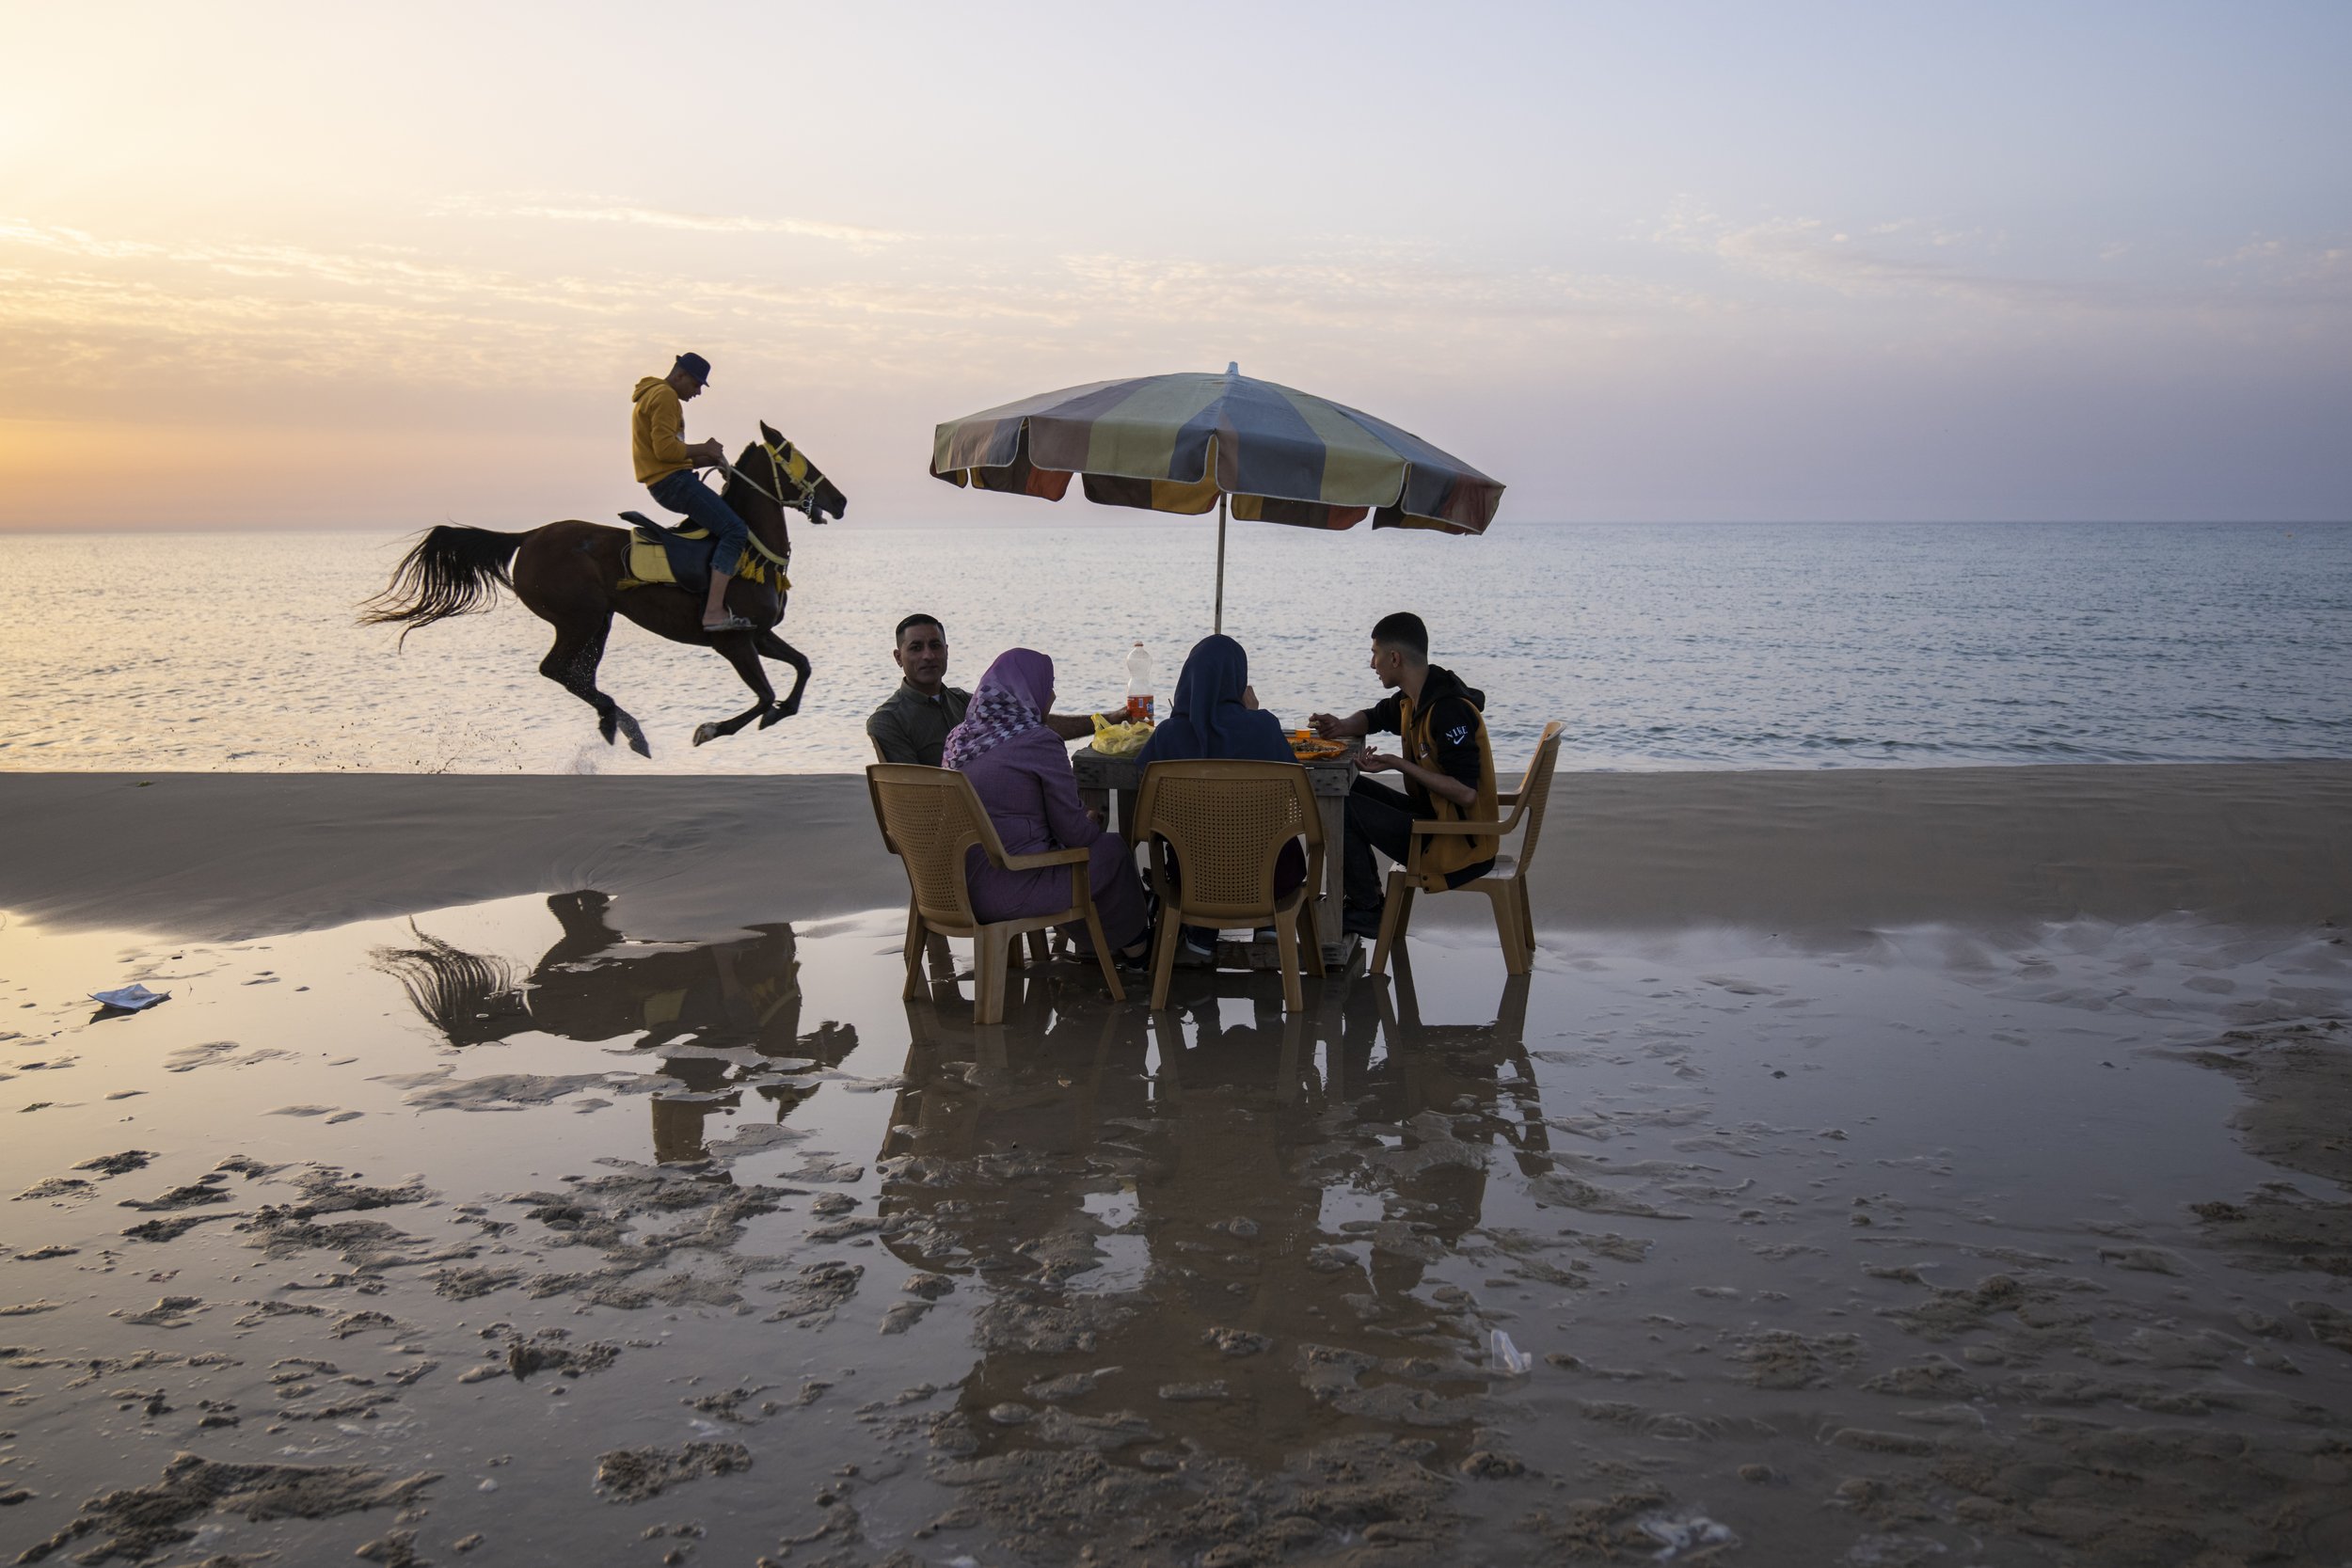  Palestinians enjoy a day on the beach in Gaza City on March 2, 2023. (AP Photo/Fatima Shbair) 